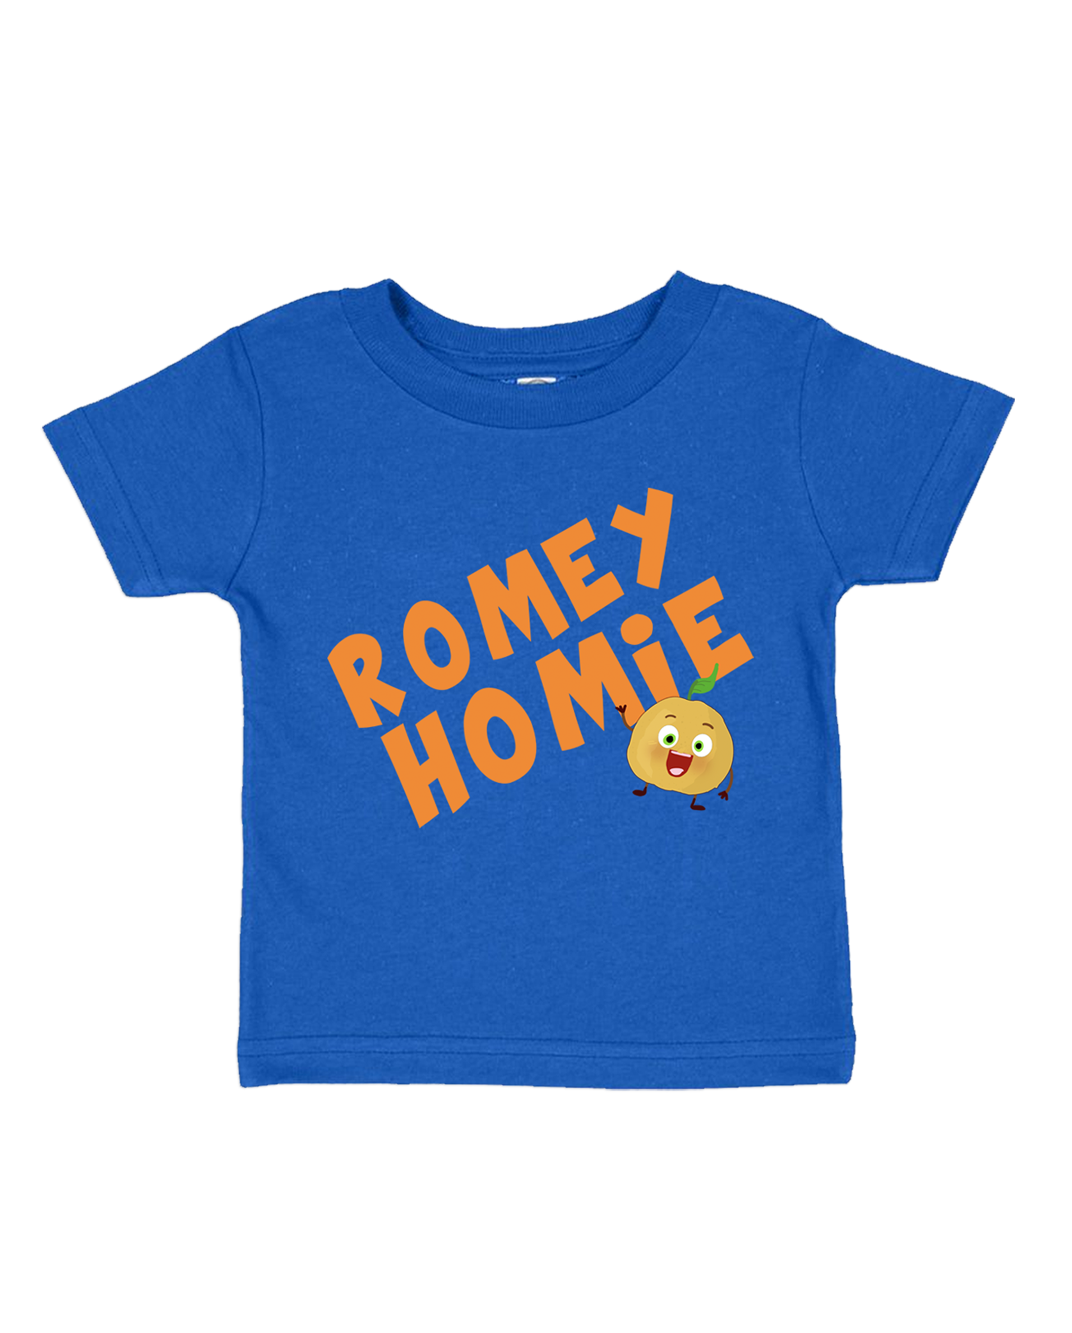 Romey Homie Toddler Tee (Blue)